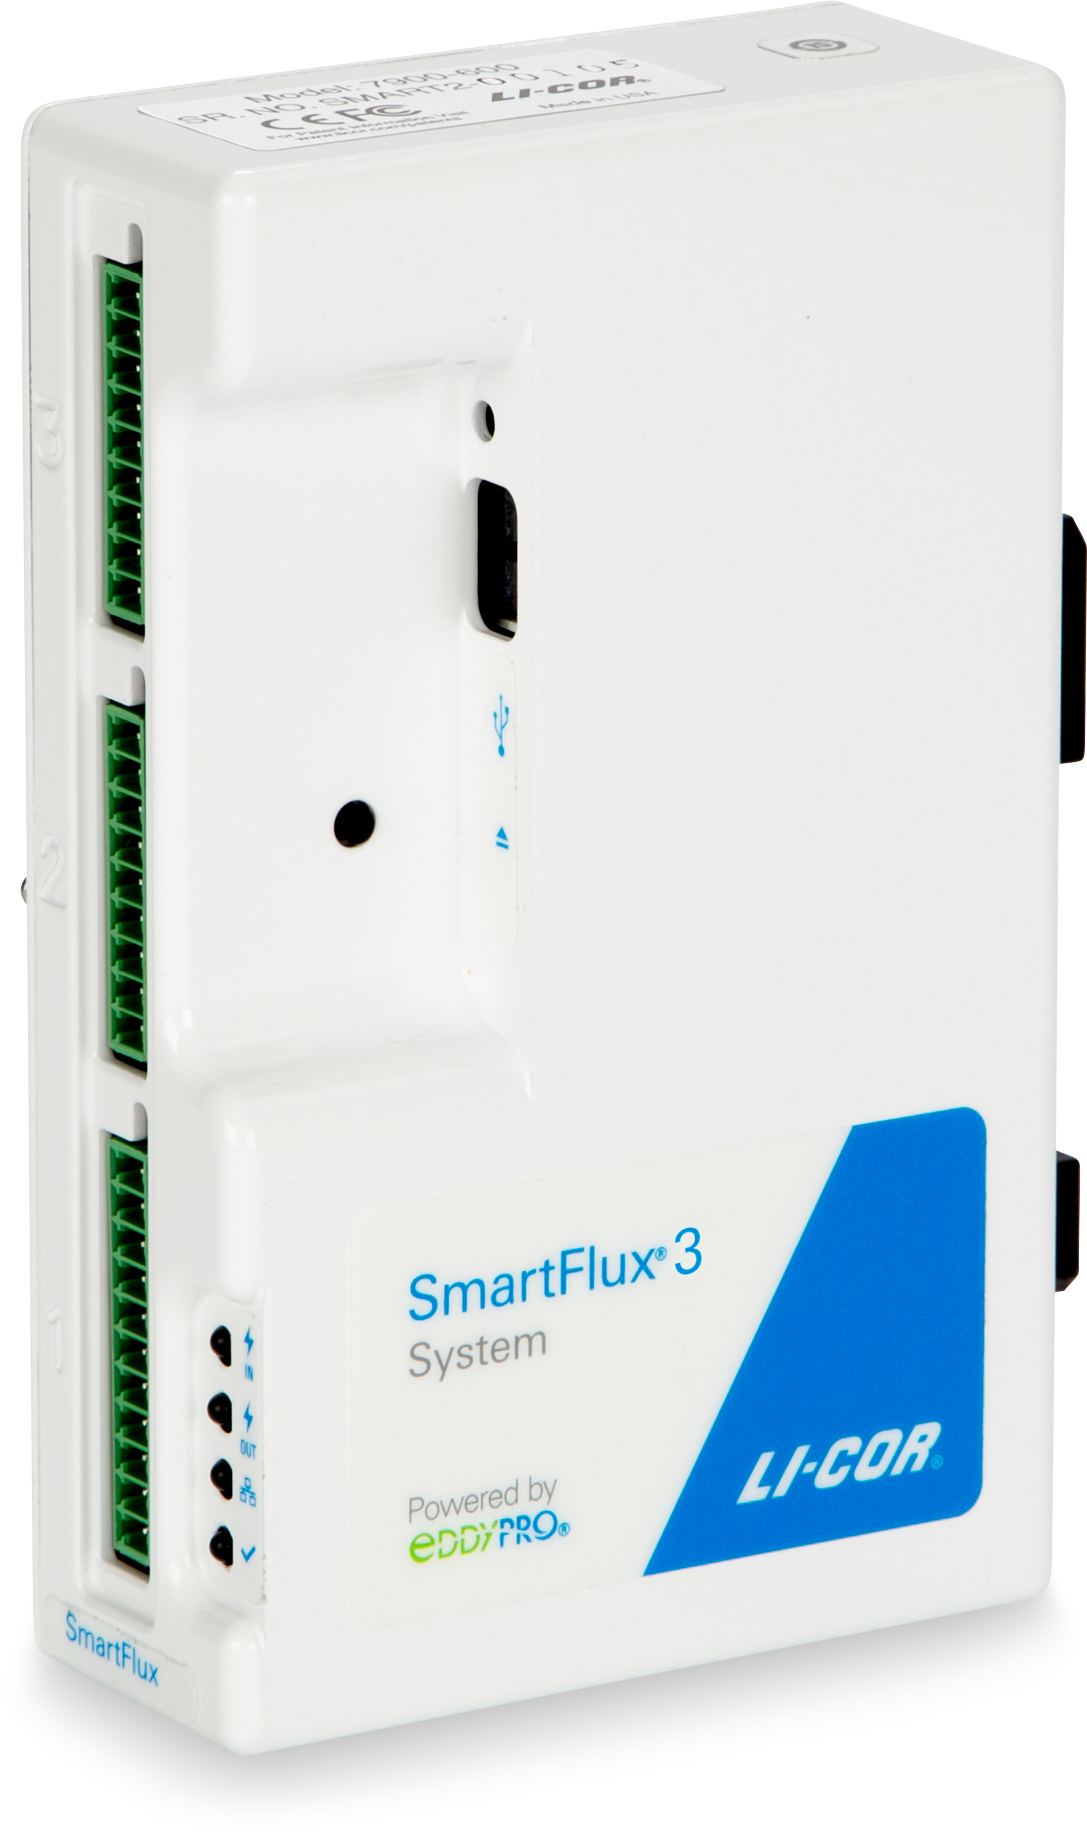 SmartFlux System version 3